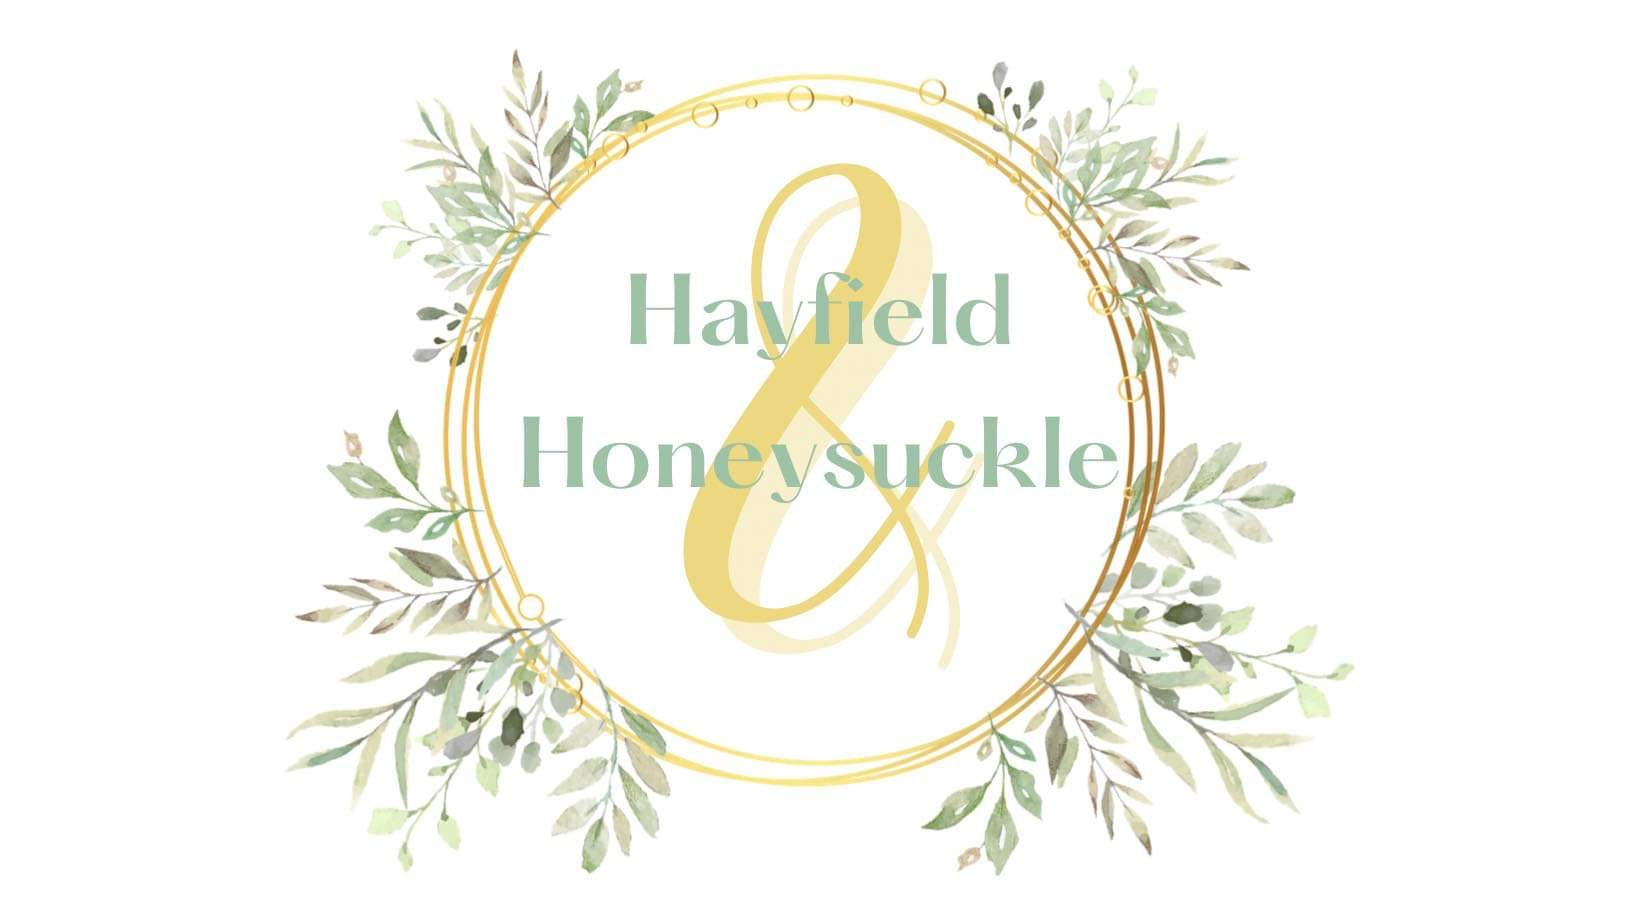 Hayfield & Honeysuckle